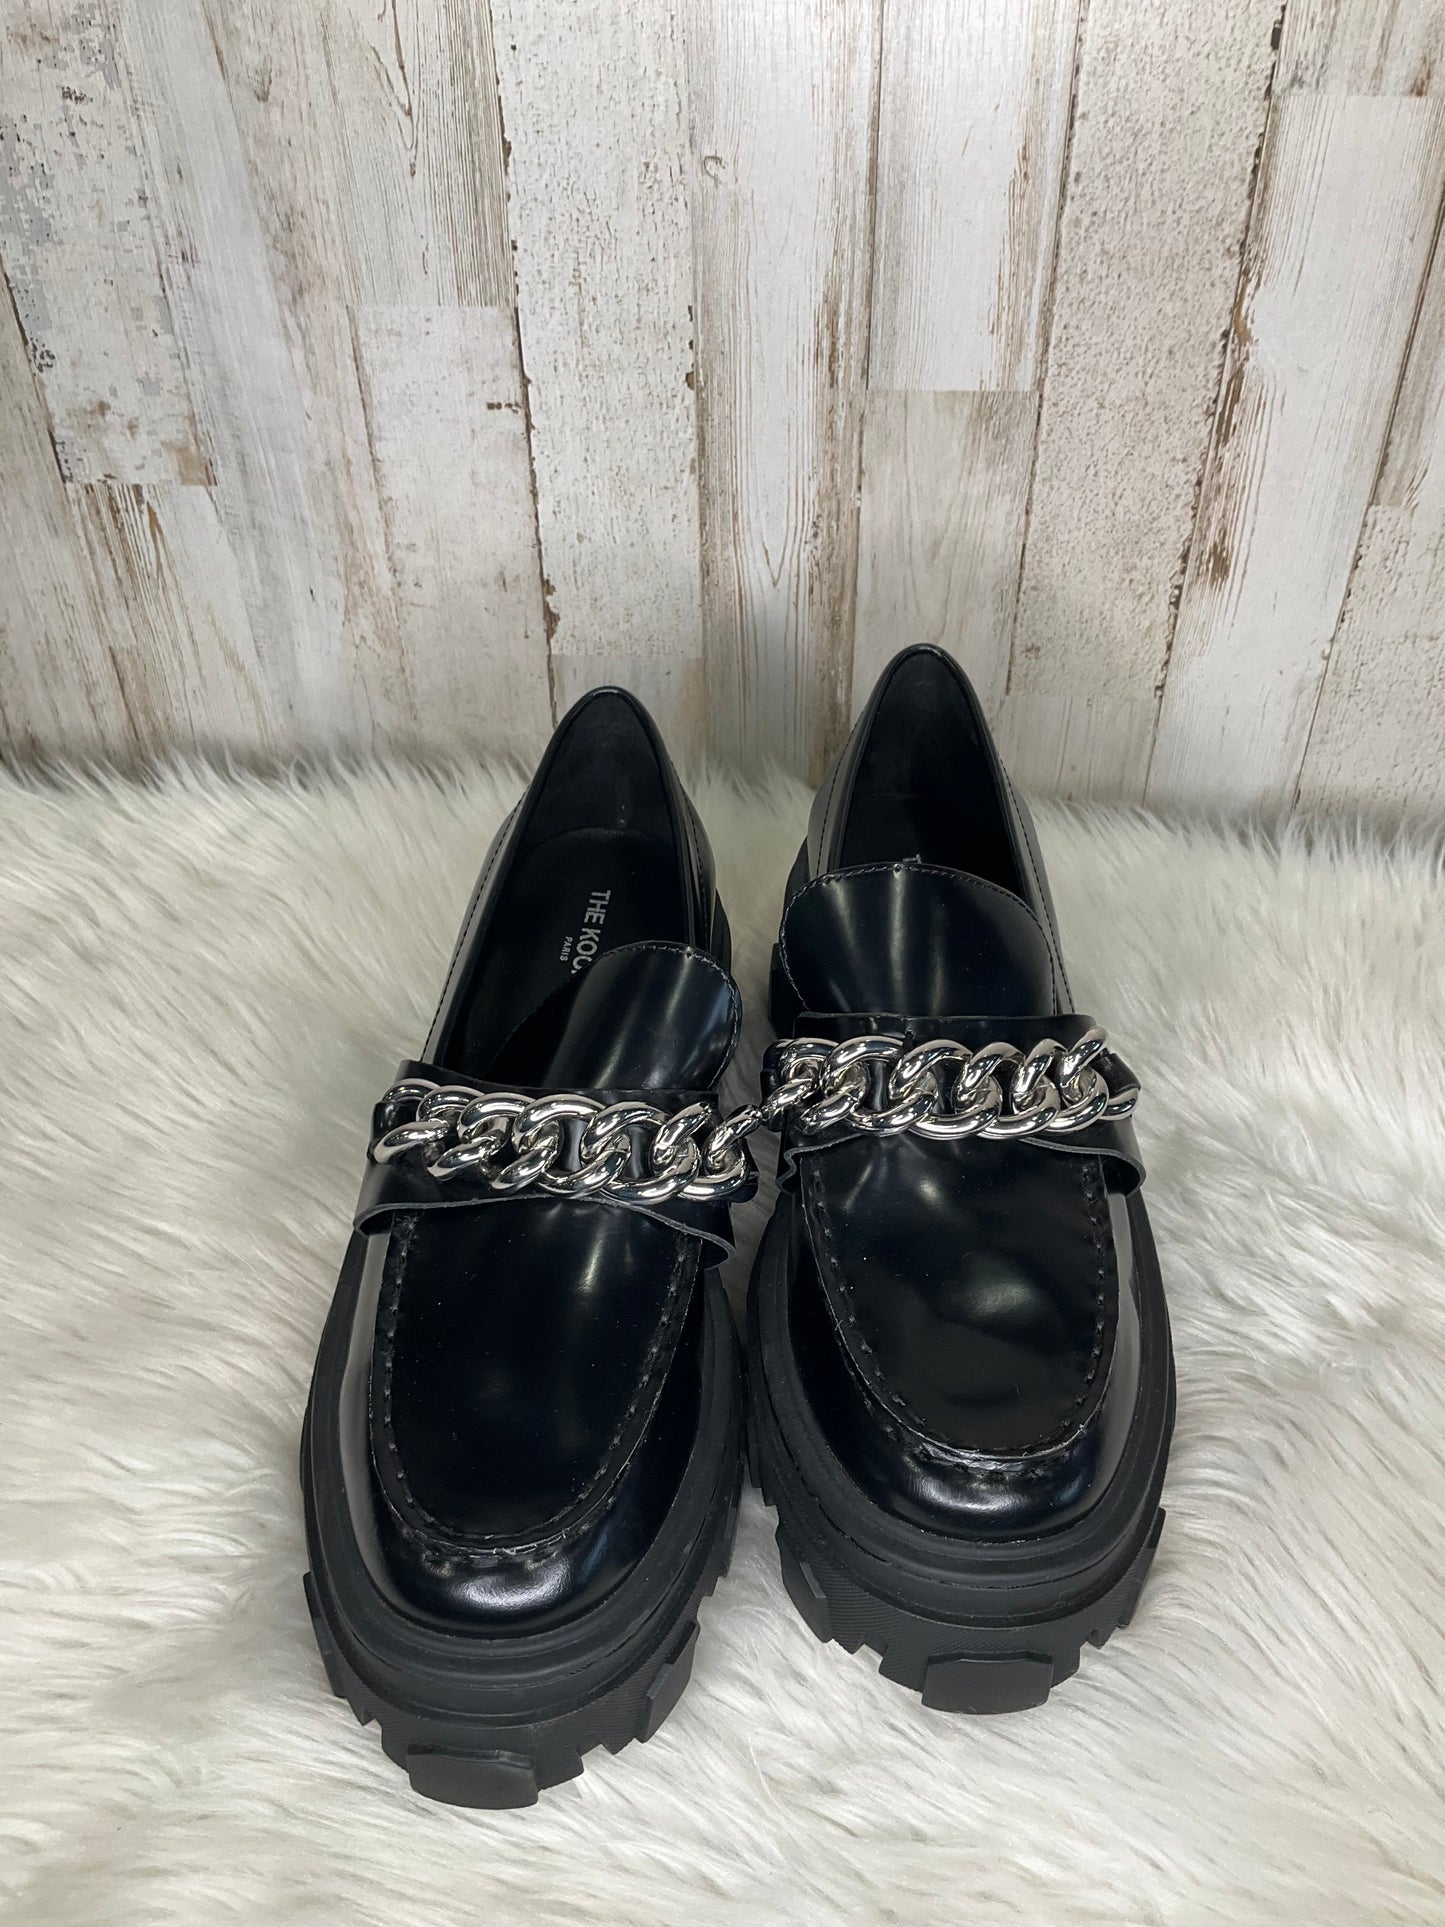 Black Shoes Heels Platform Cma, Size 8